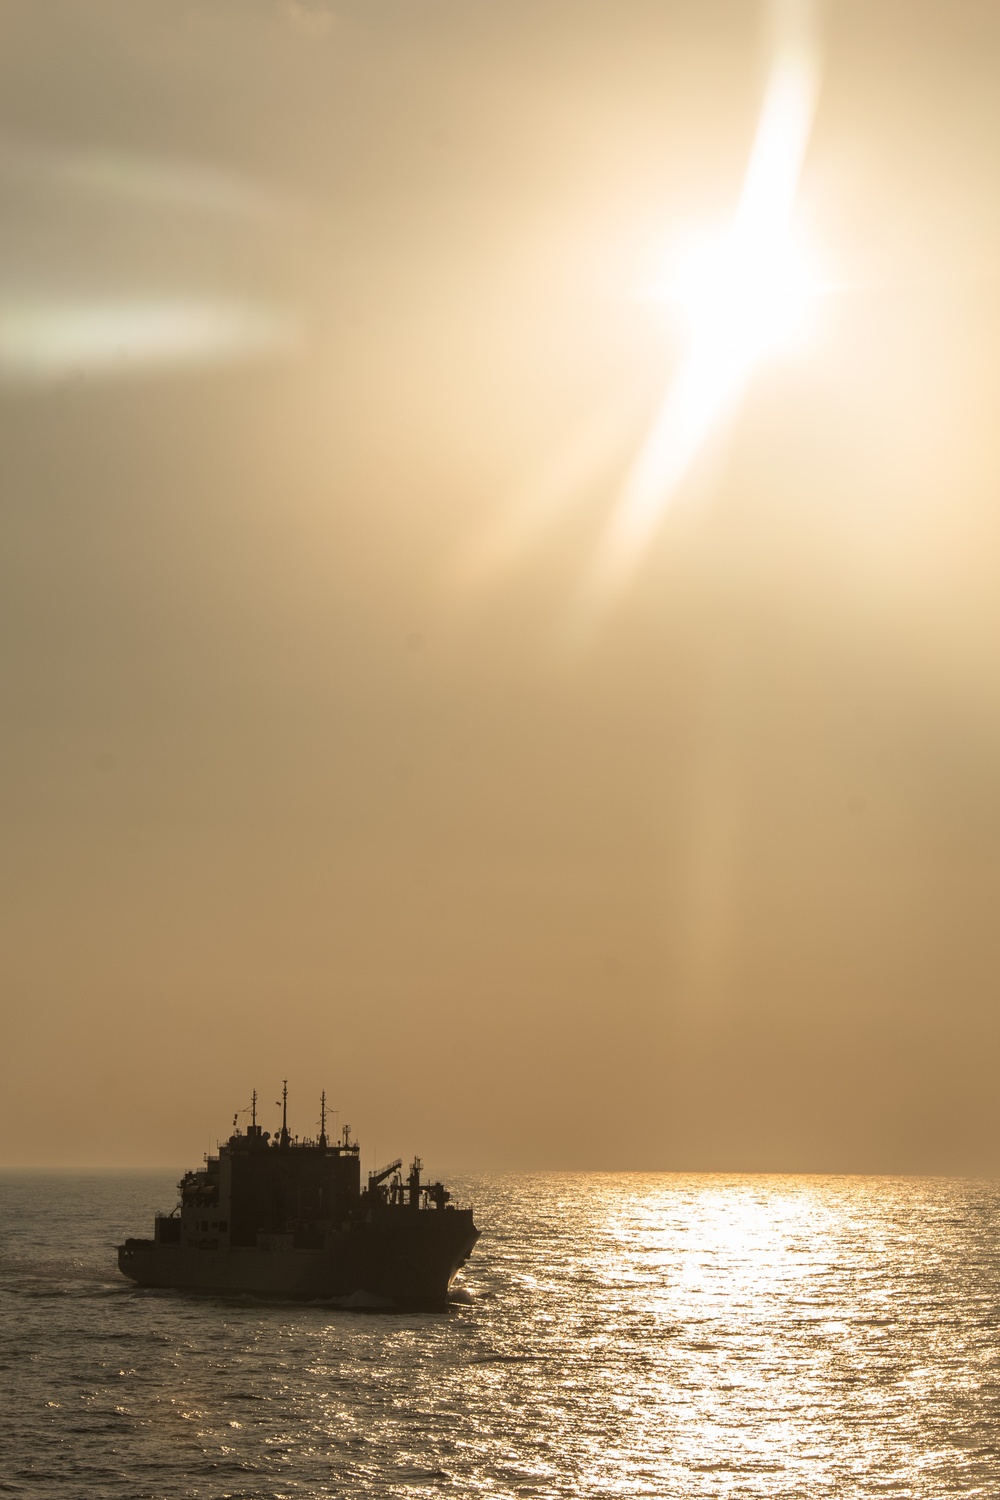 USS Ronald Reagan (CVN 76) conducts a replenishment-at-sea